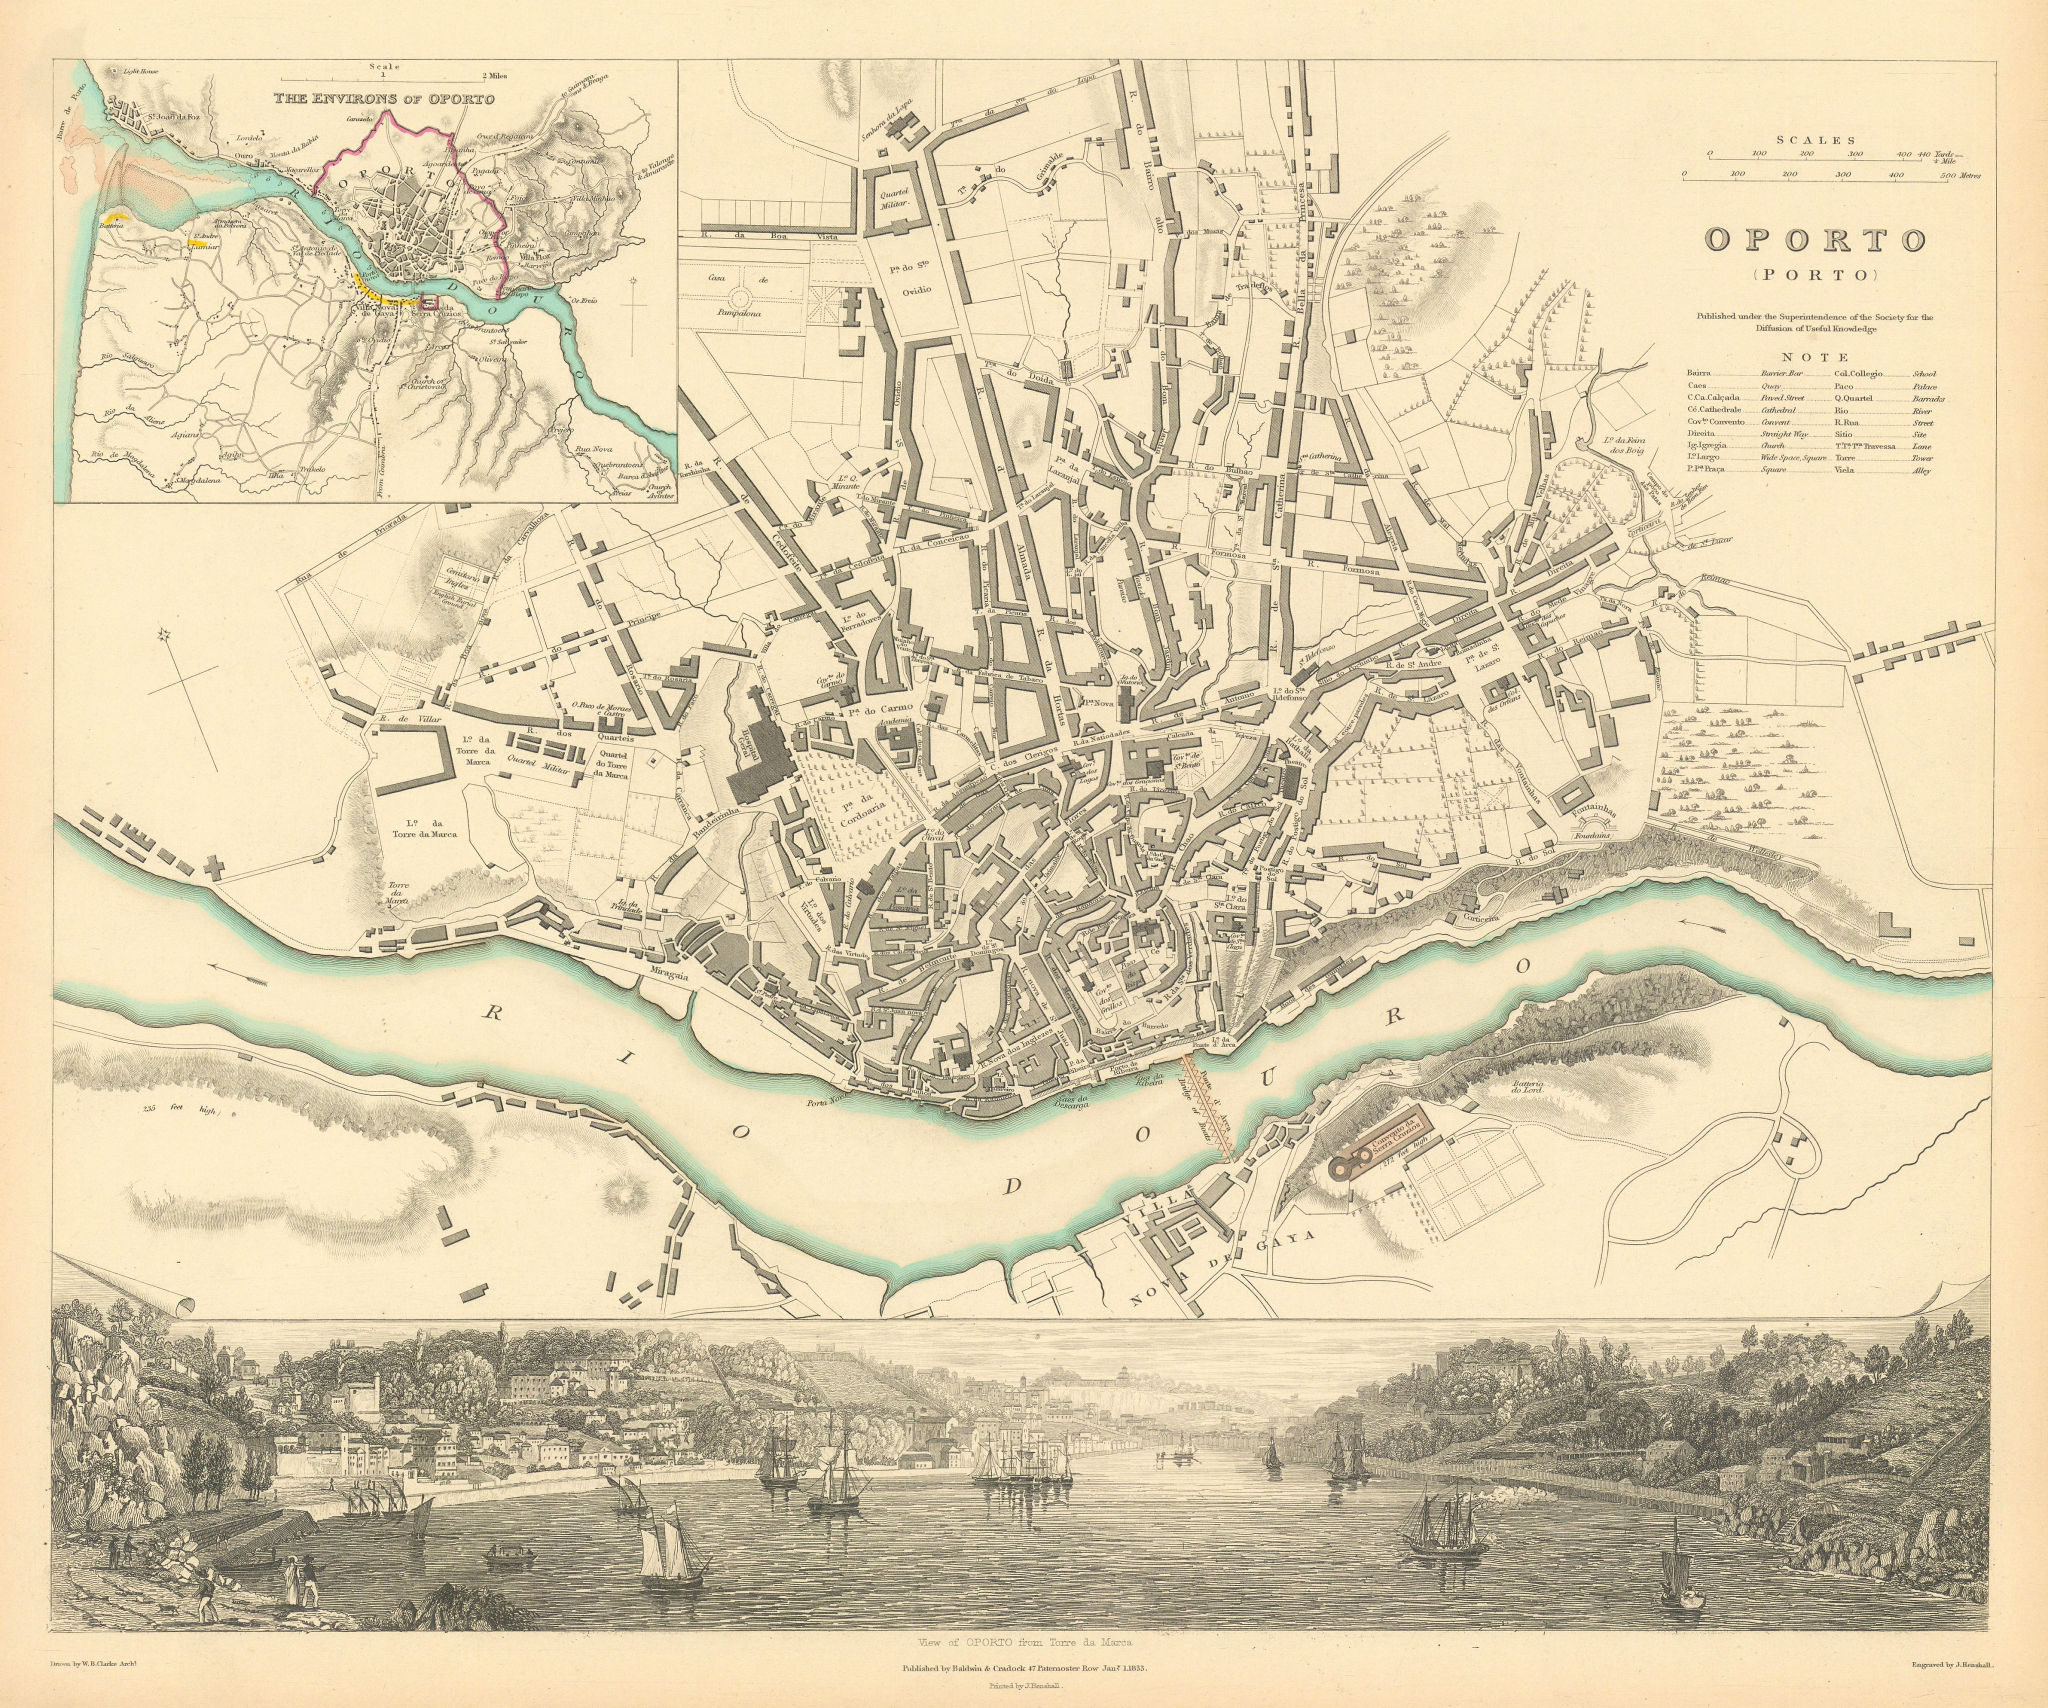 OPORTO PORTO. Antique town city map plan & panorama. Inset environs. SDUK 1844